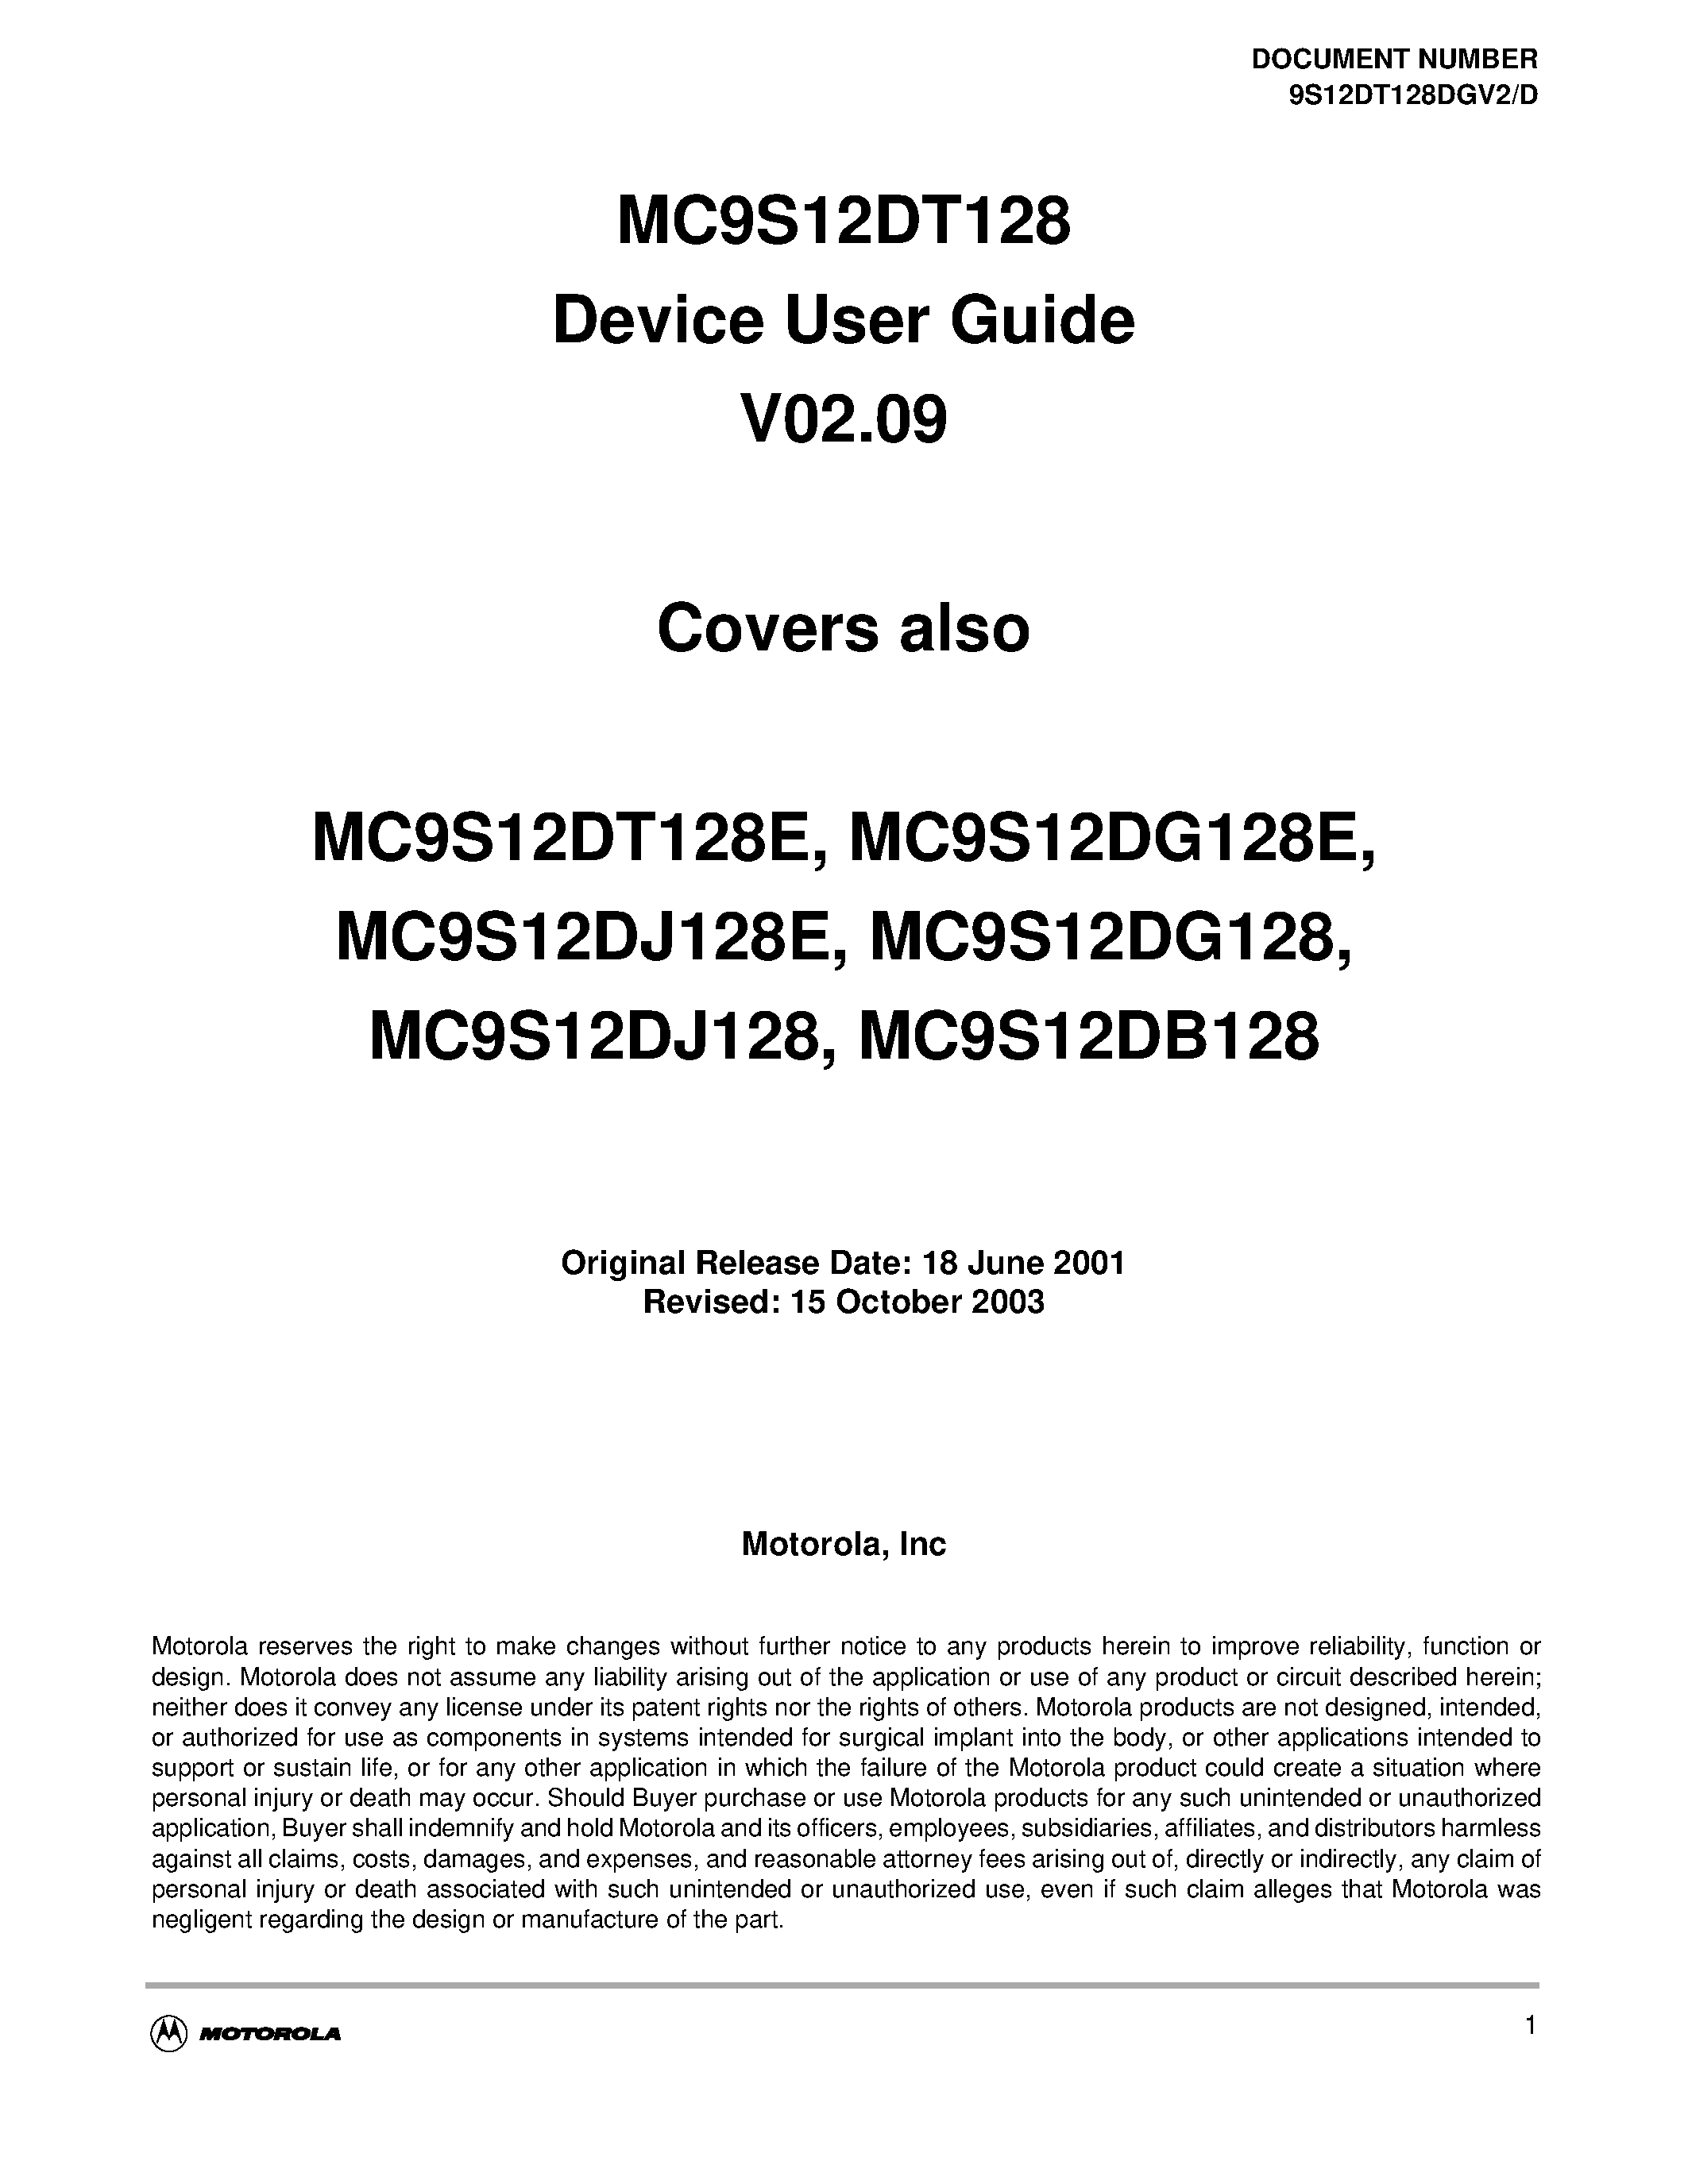 Даташит S12SCIV2 - MC9S12DT128 Device User Guide V02.09 страница 1